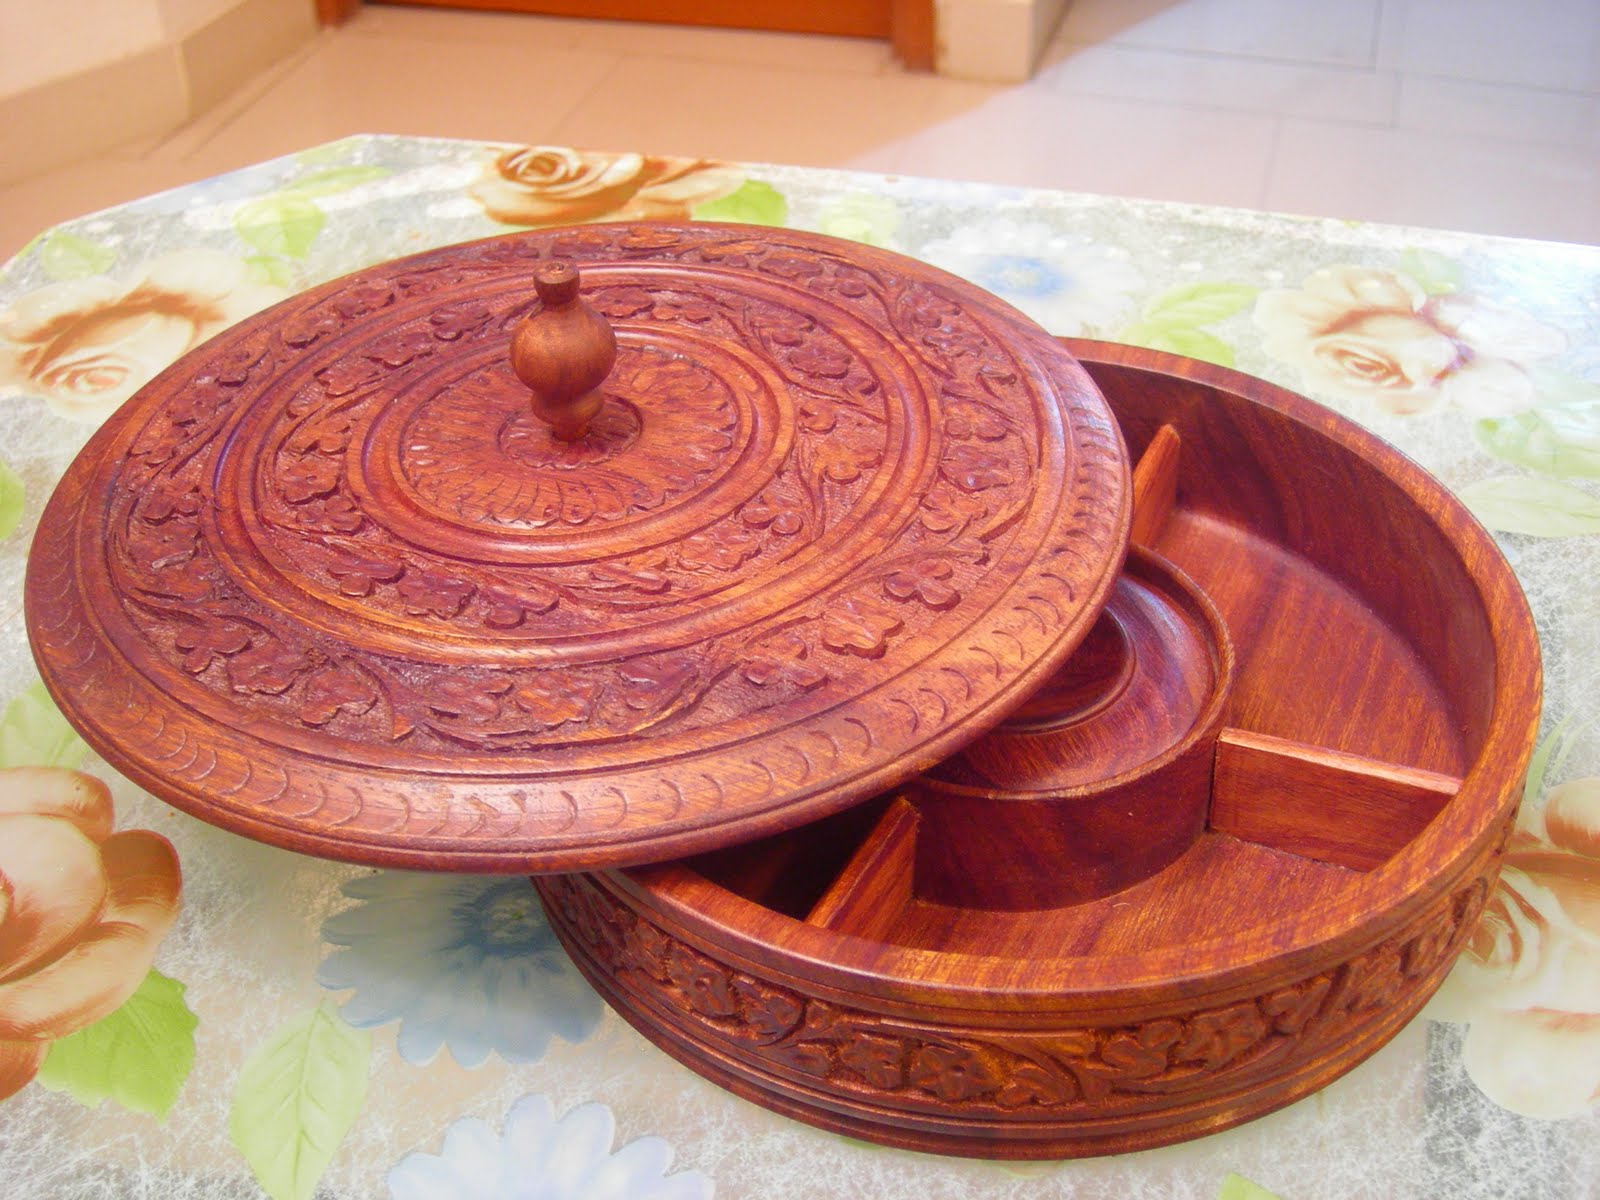 Made in Pakistan Handicrafts: Wooden Crafts